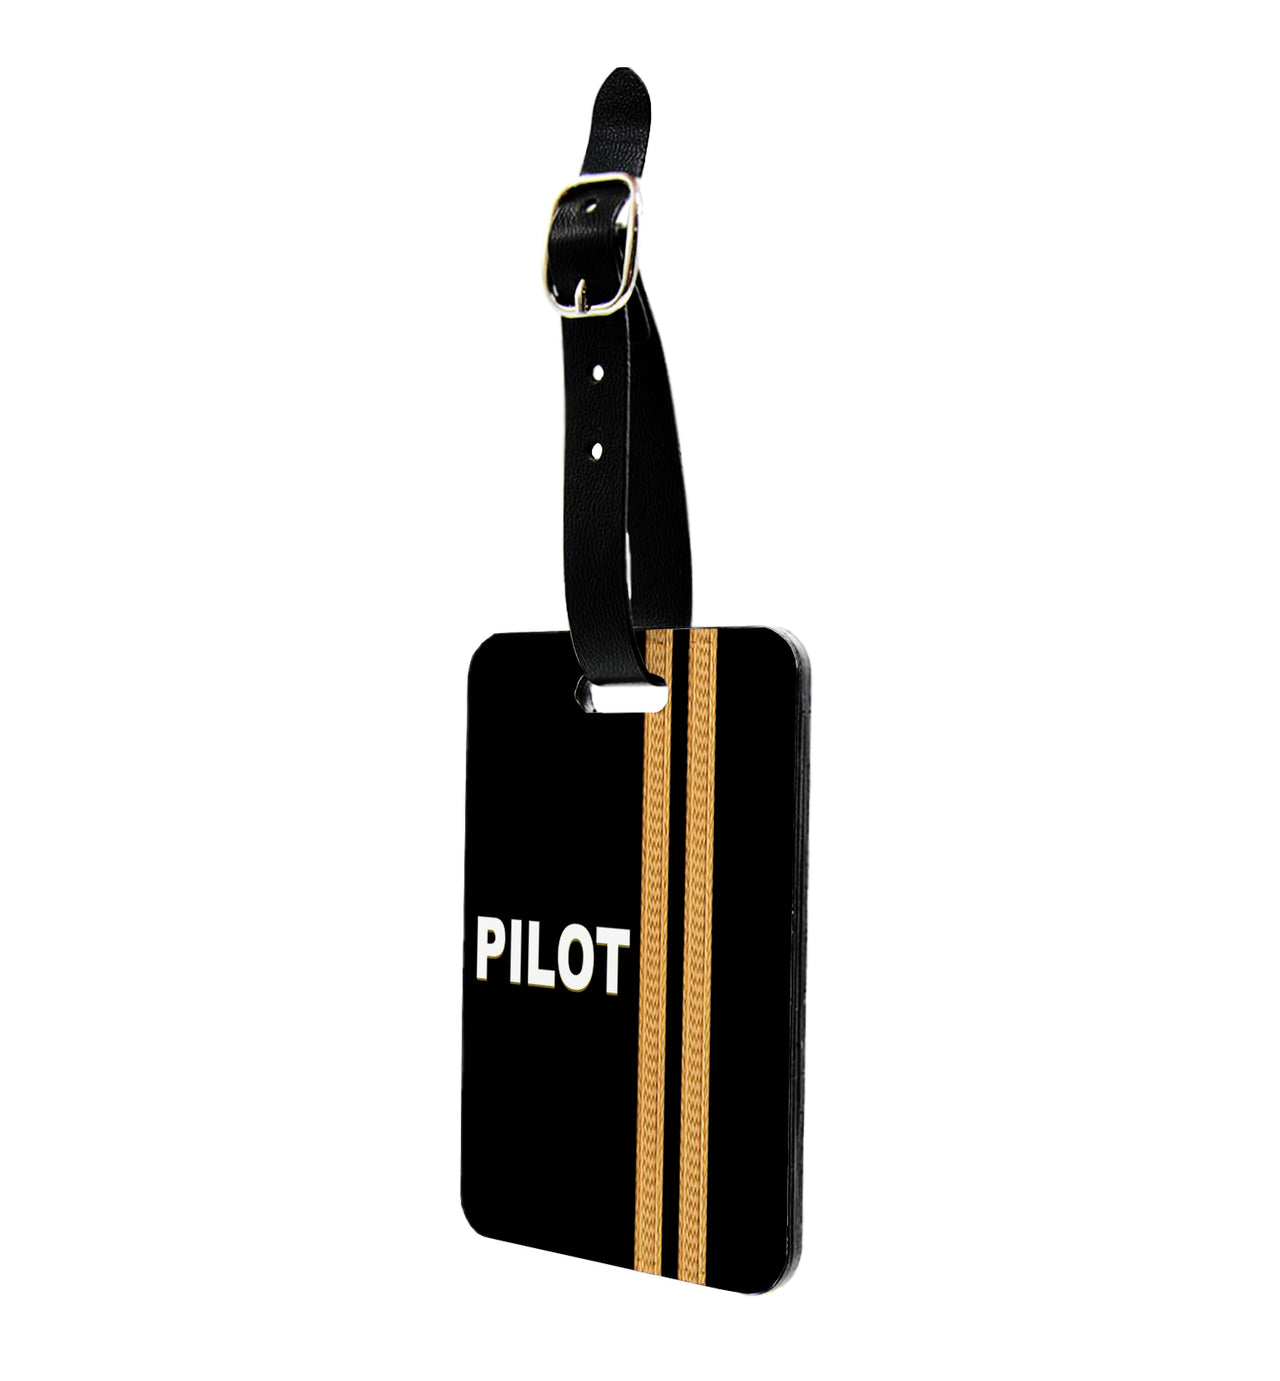 PILOT & Pilot Epaulettes (4,3,2 Lines) Designed Luggage Tag